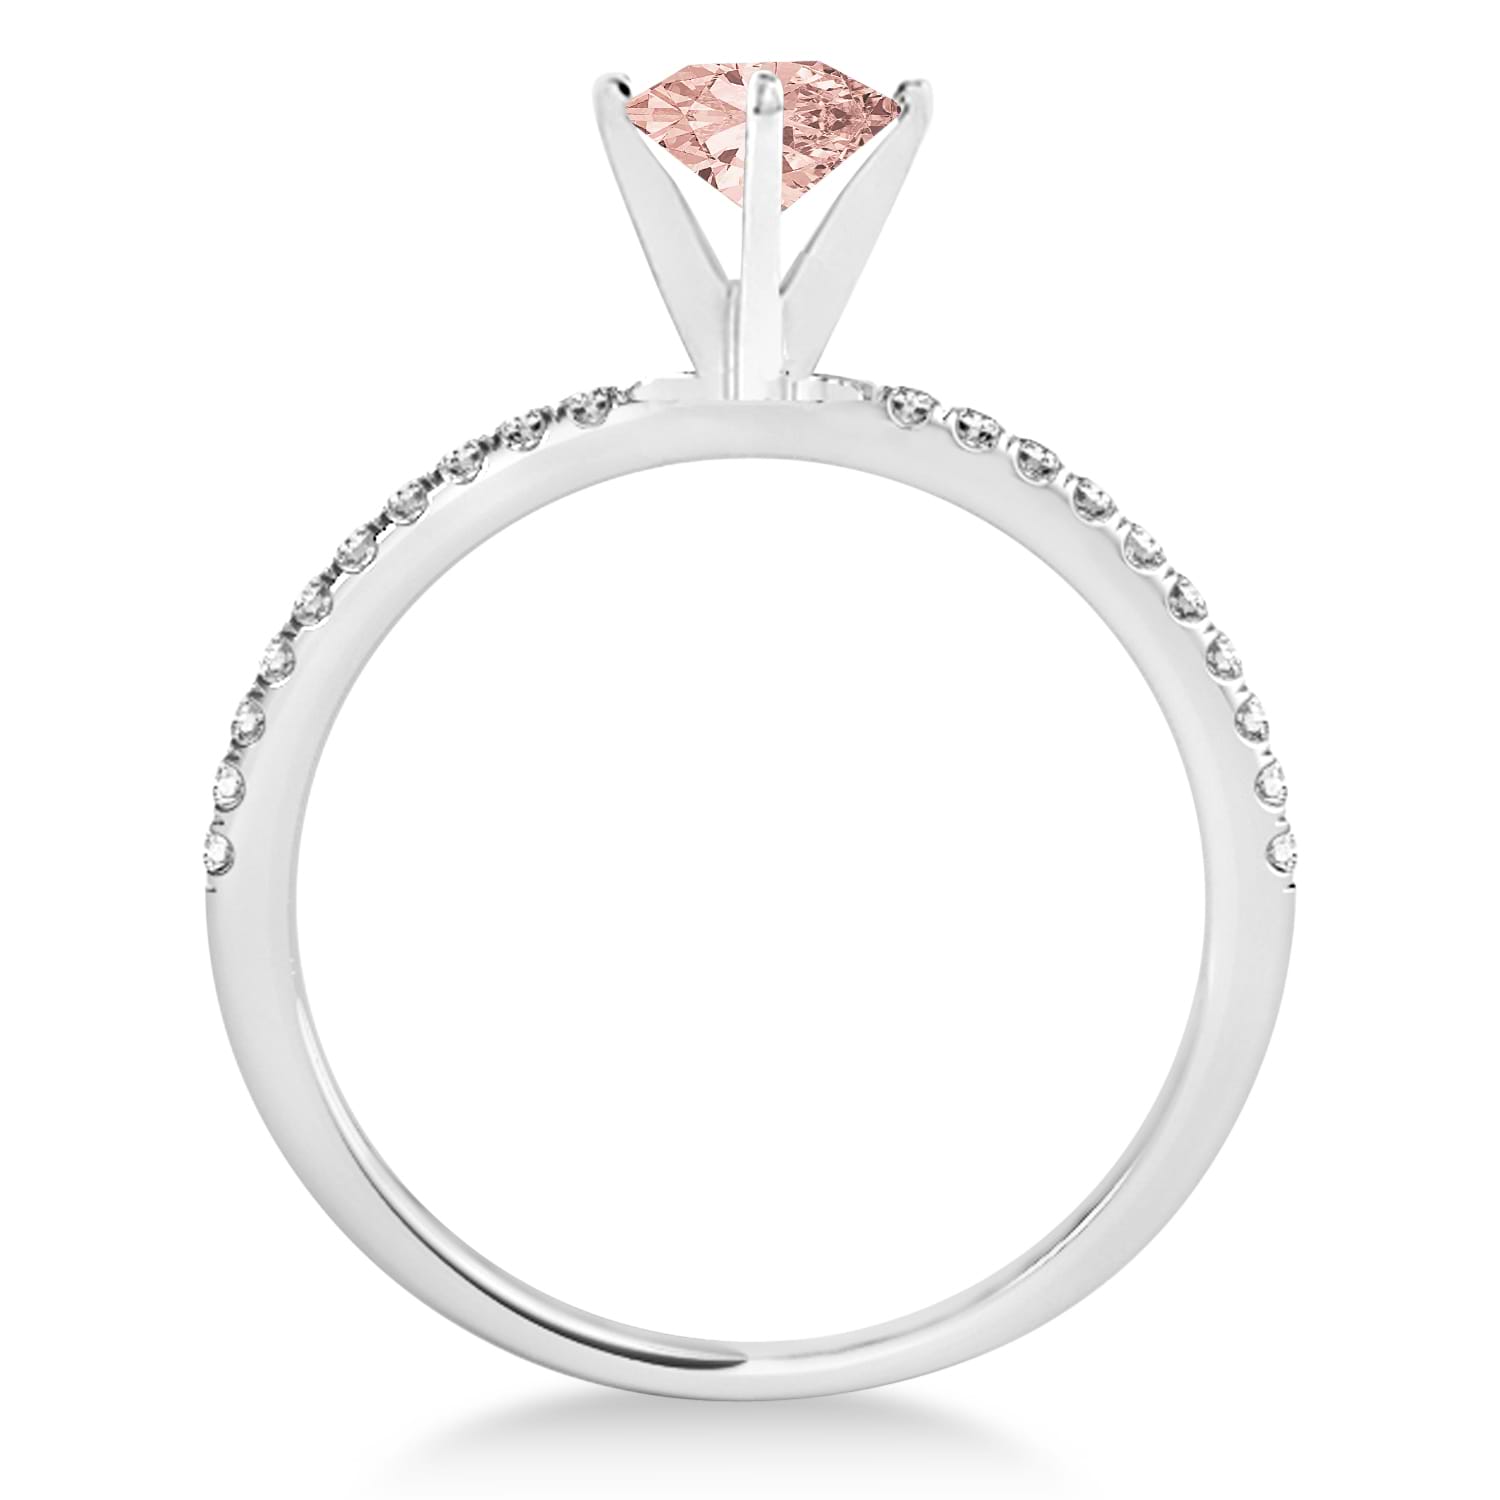 Morganite & Diamond Accented Oval Shape Engagement Ring Palladium (2.00ct)